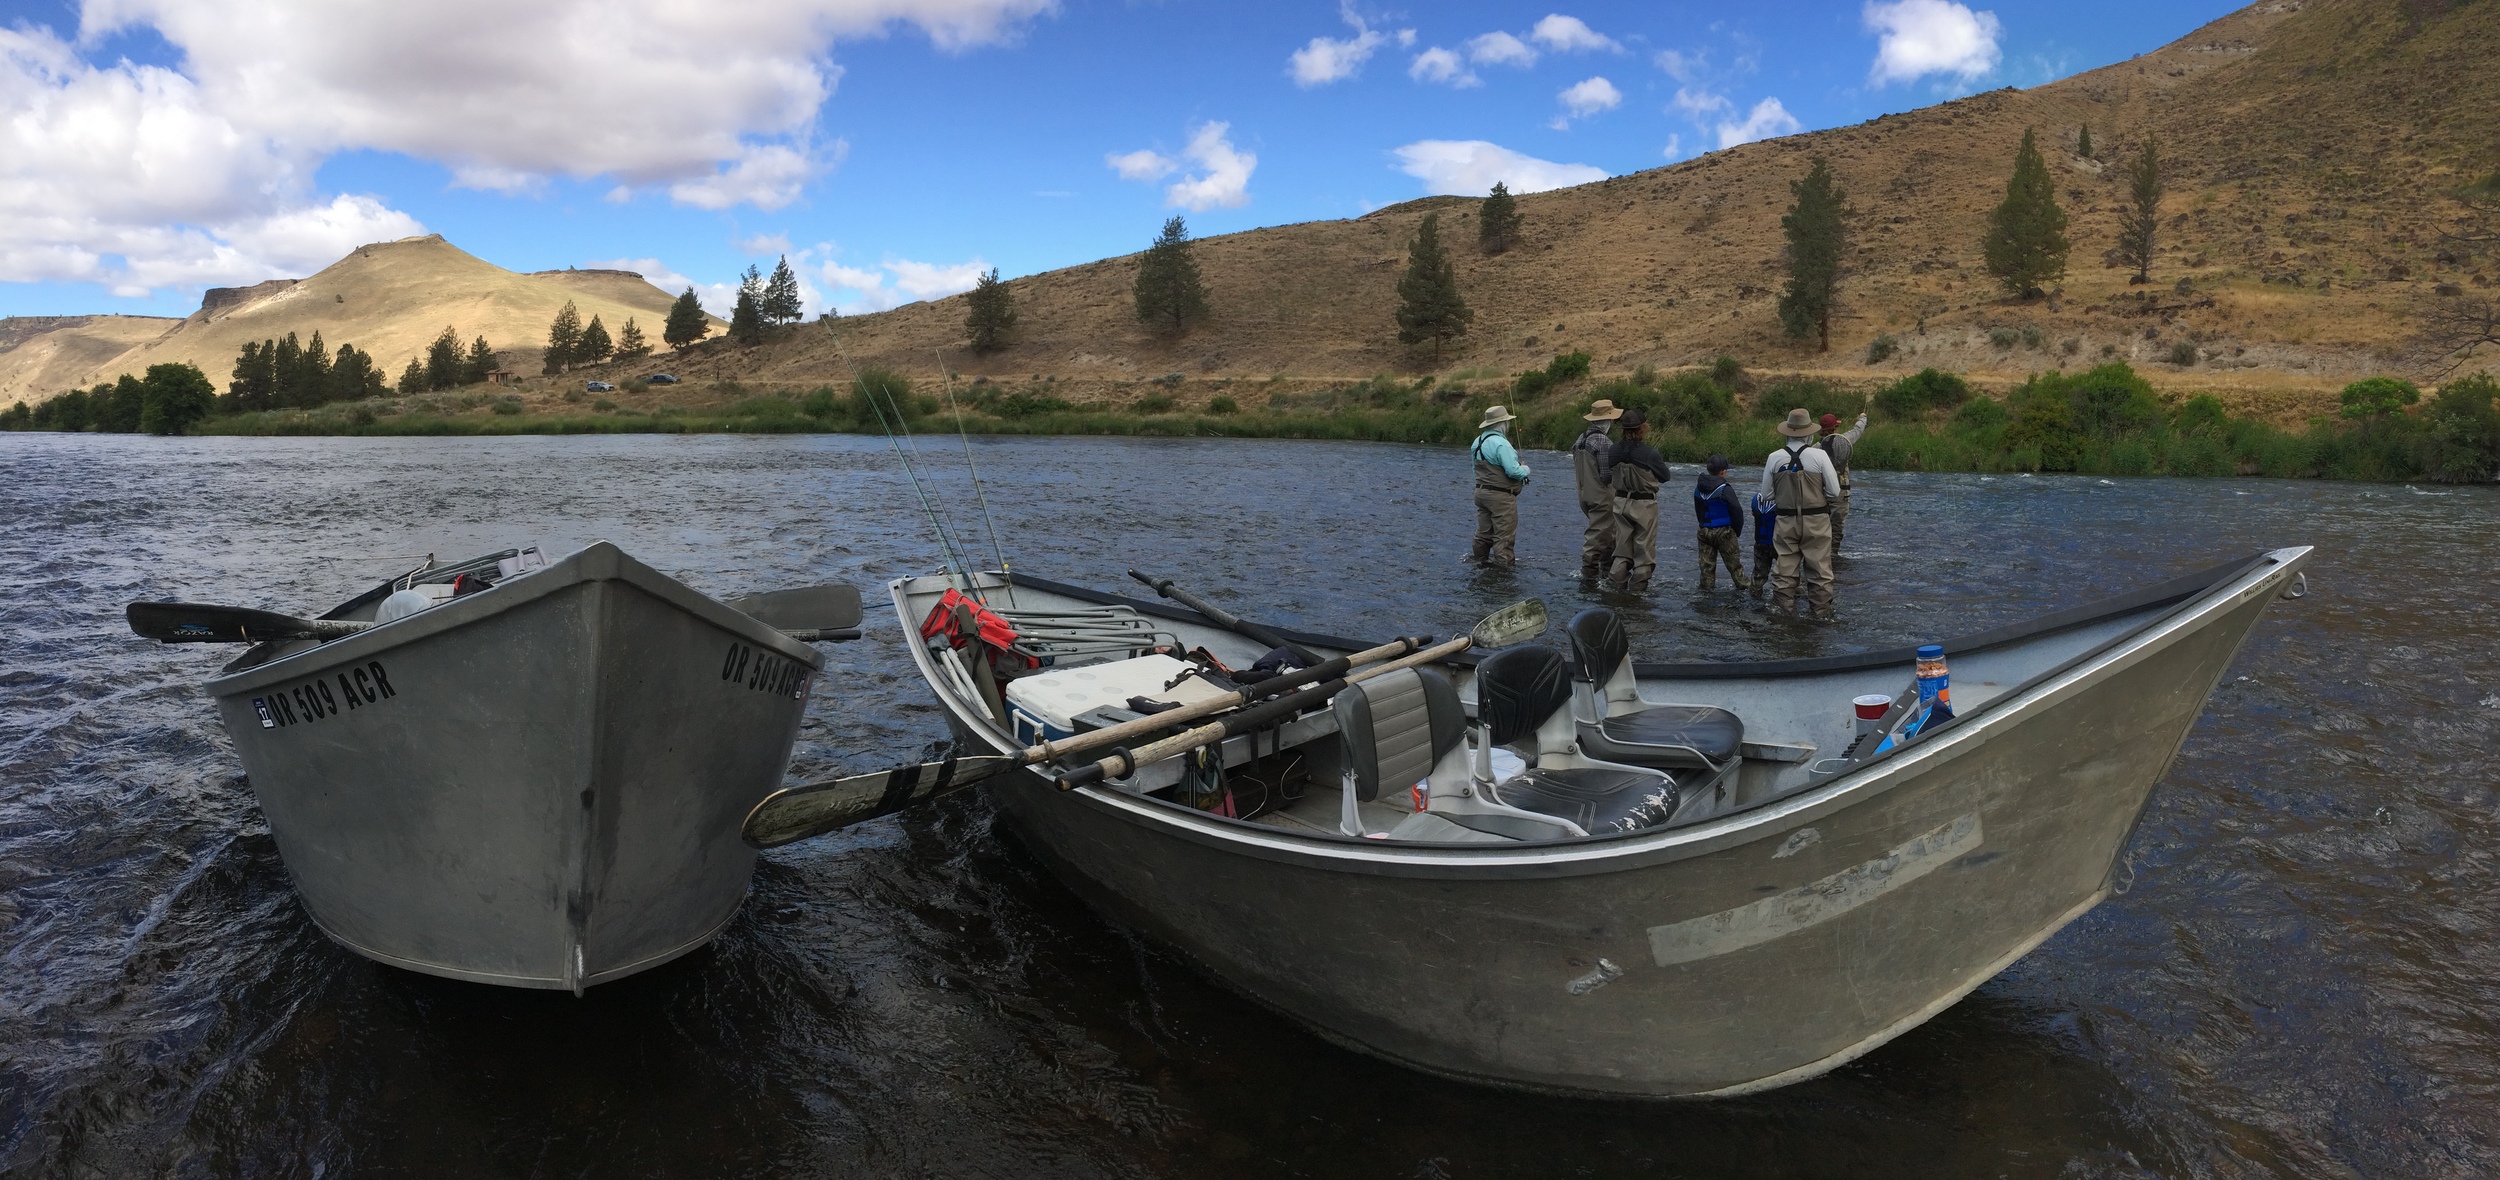 Family Fly Fishing Lessons & Drift Boat Trip near Bend, Oregon